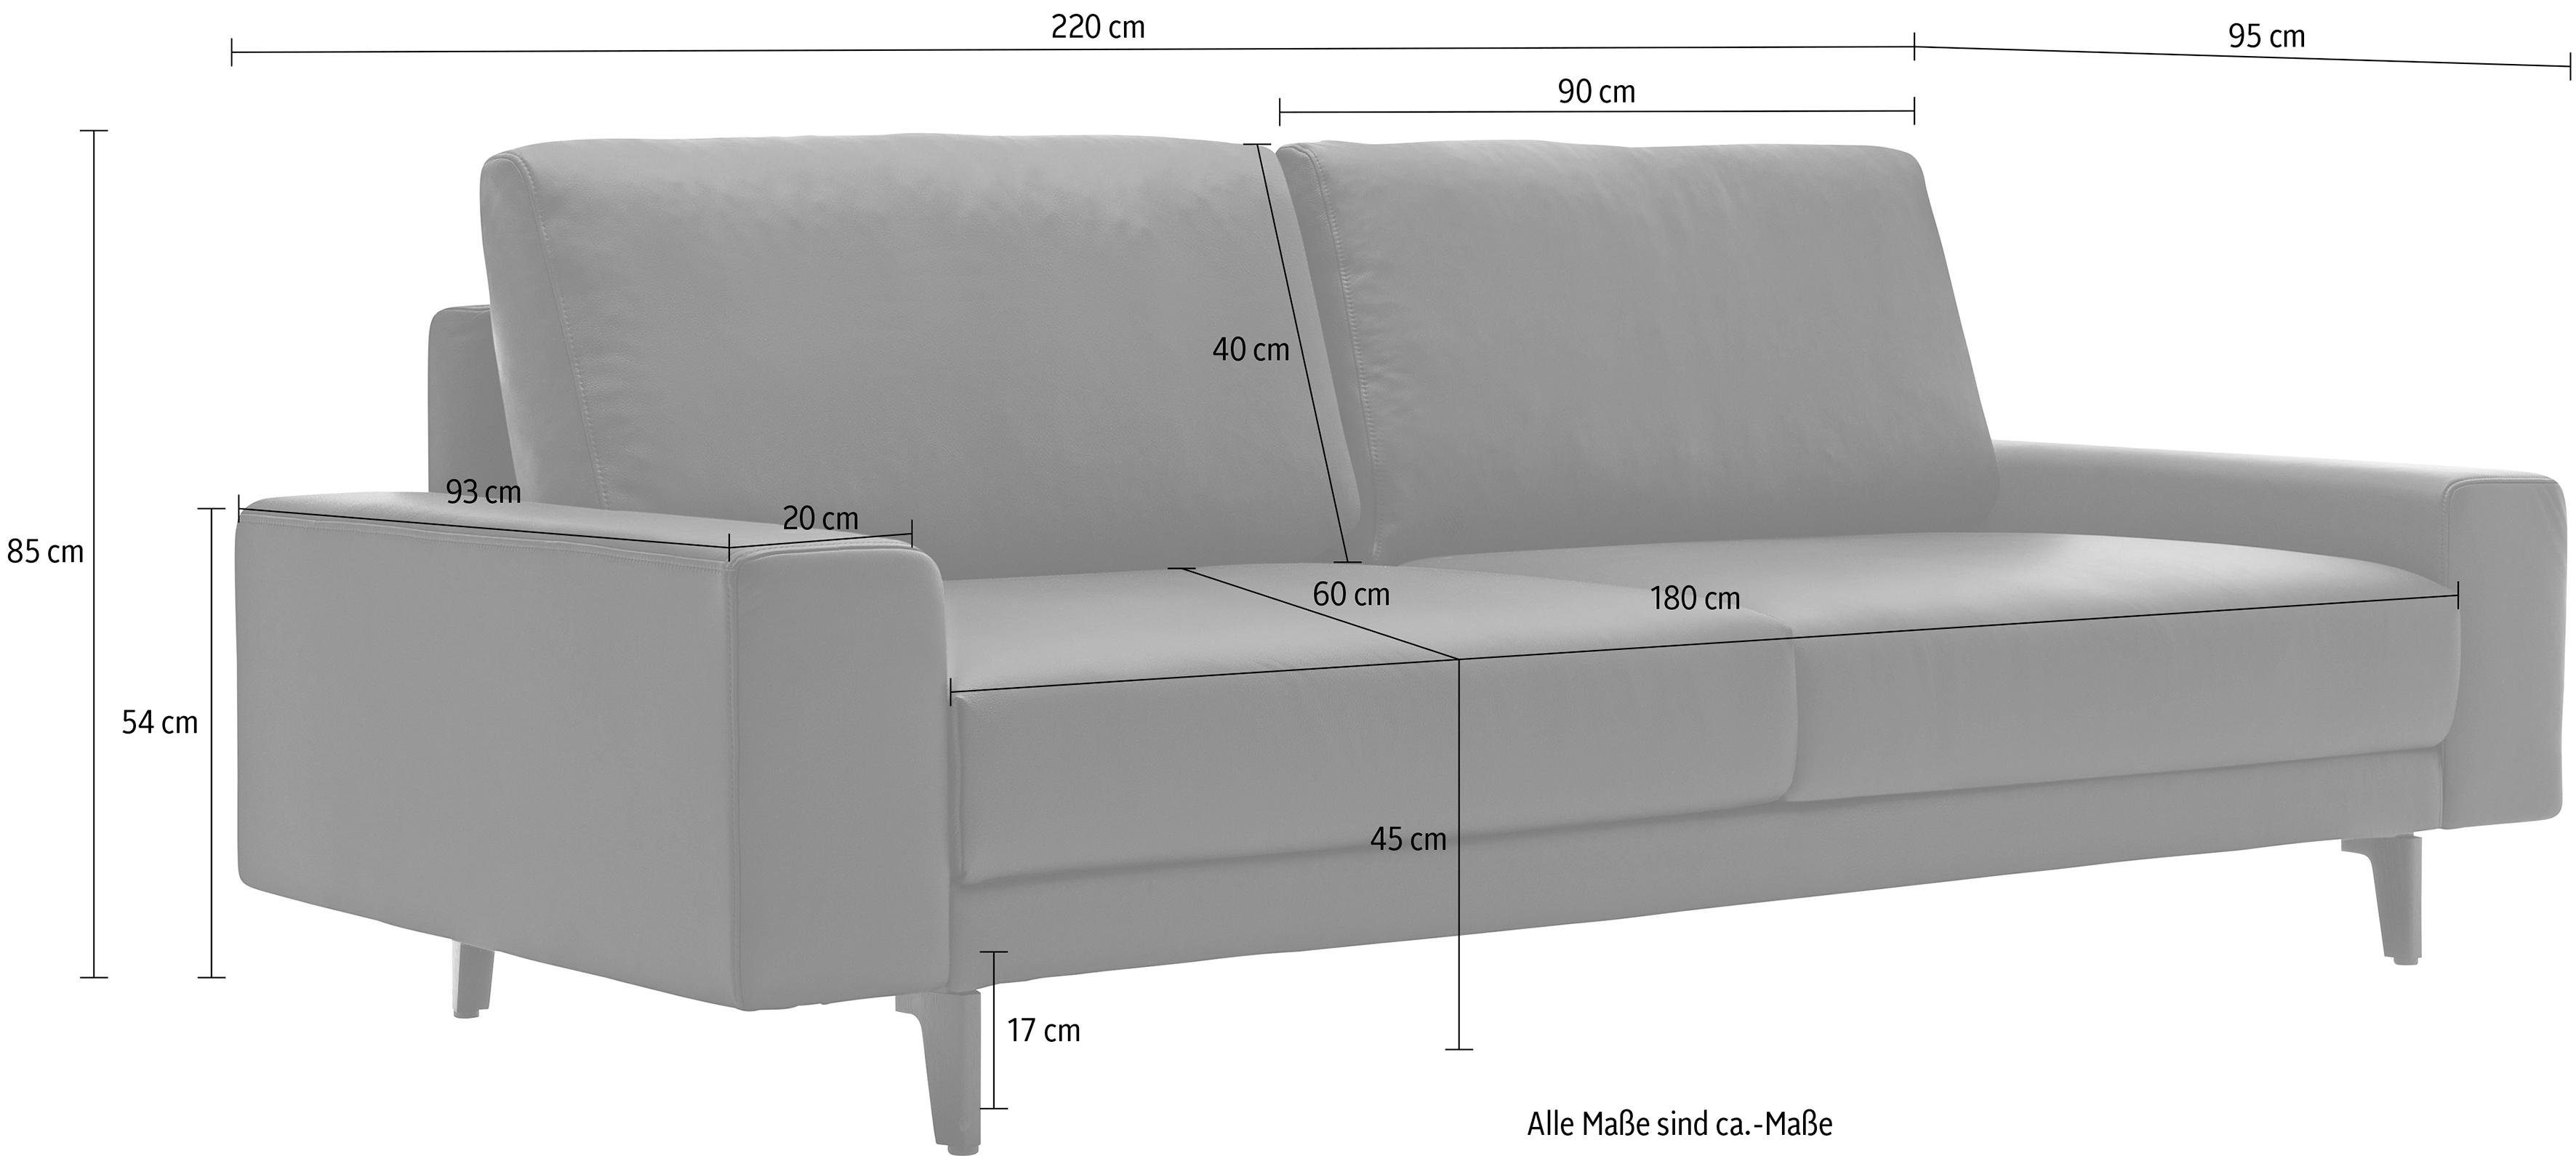 3-Sitzer hs.450, Breite sofa 220 cm umbragrau, niedrig, in breit Alugussfüße hülsta Armlehne